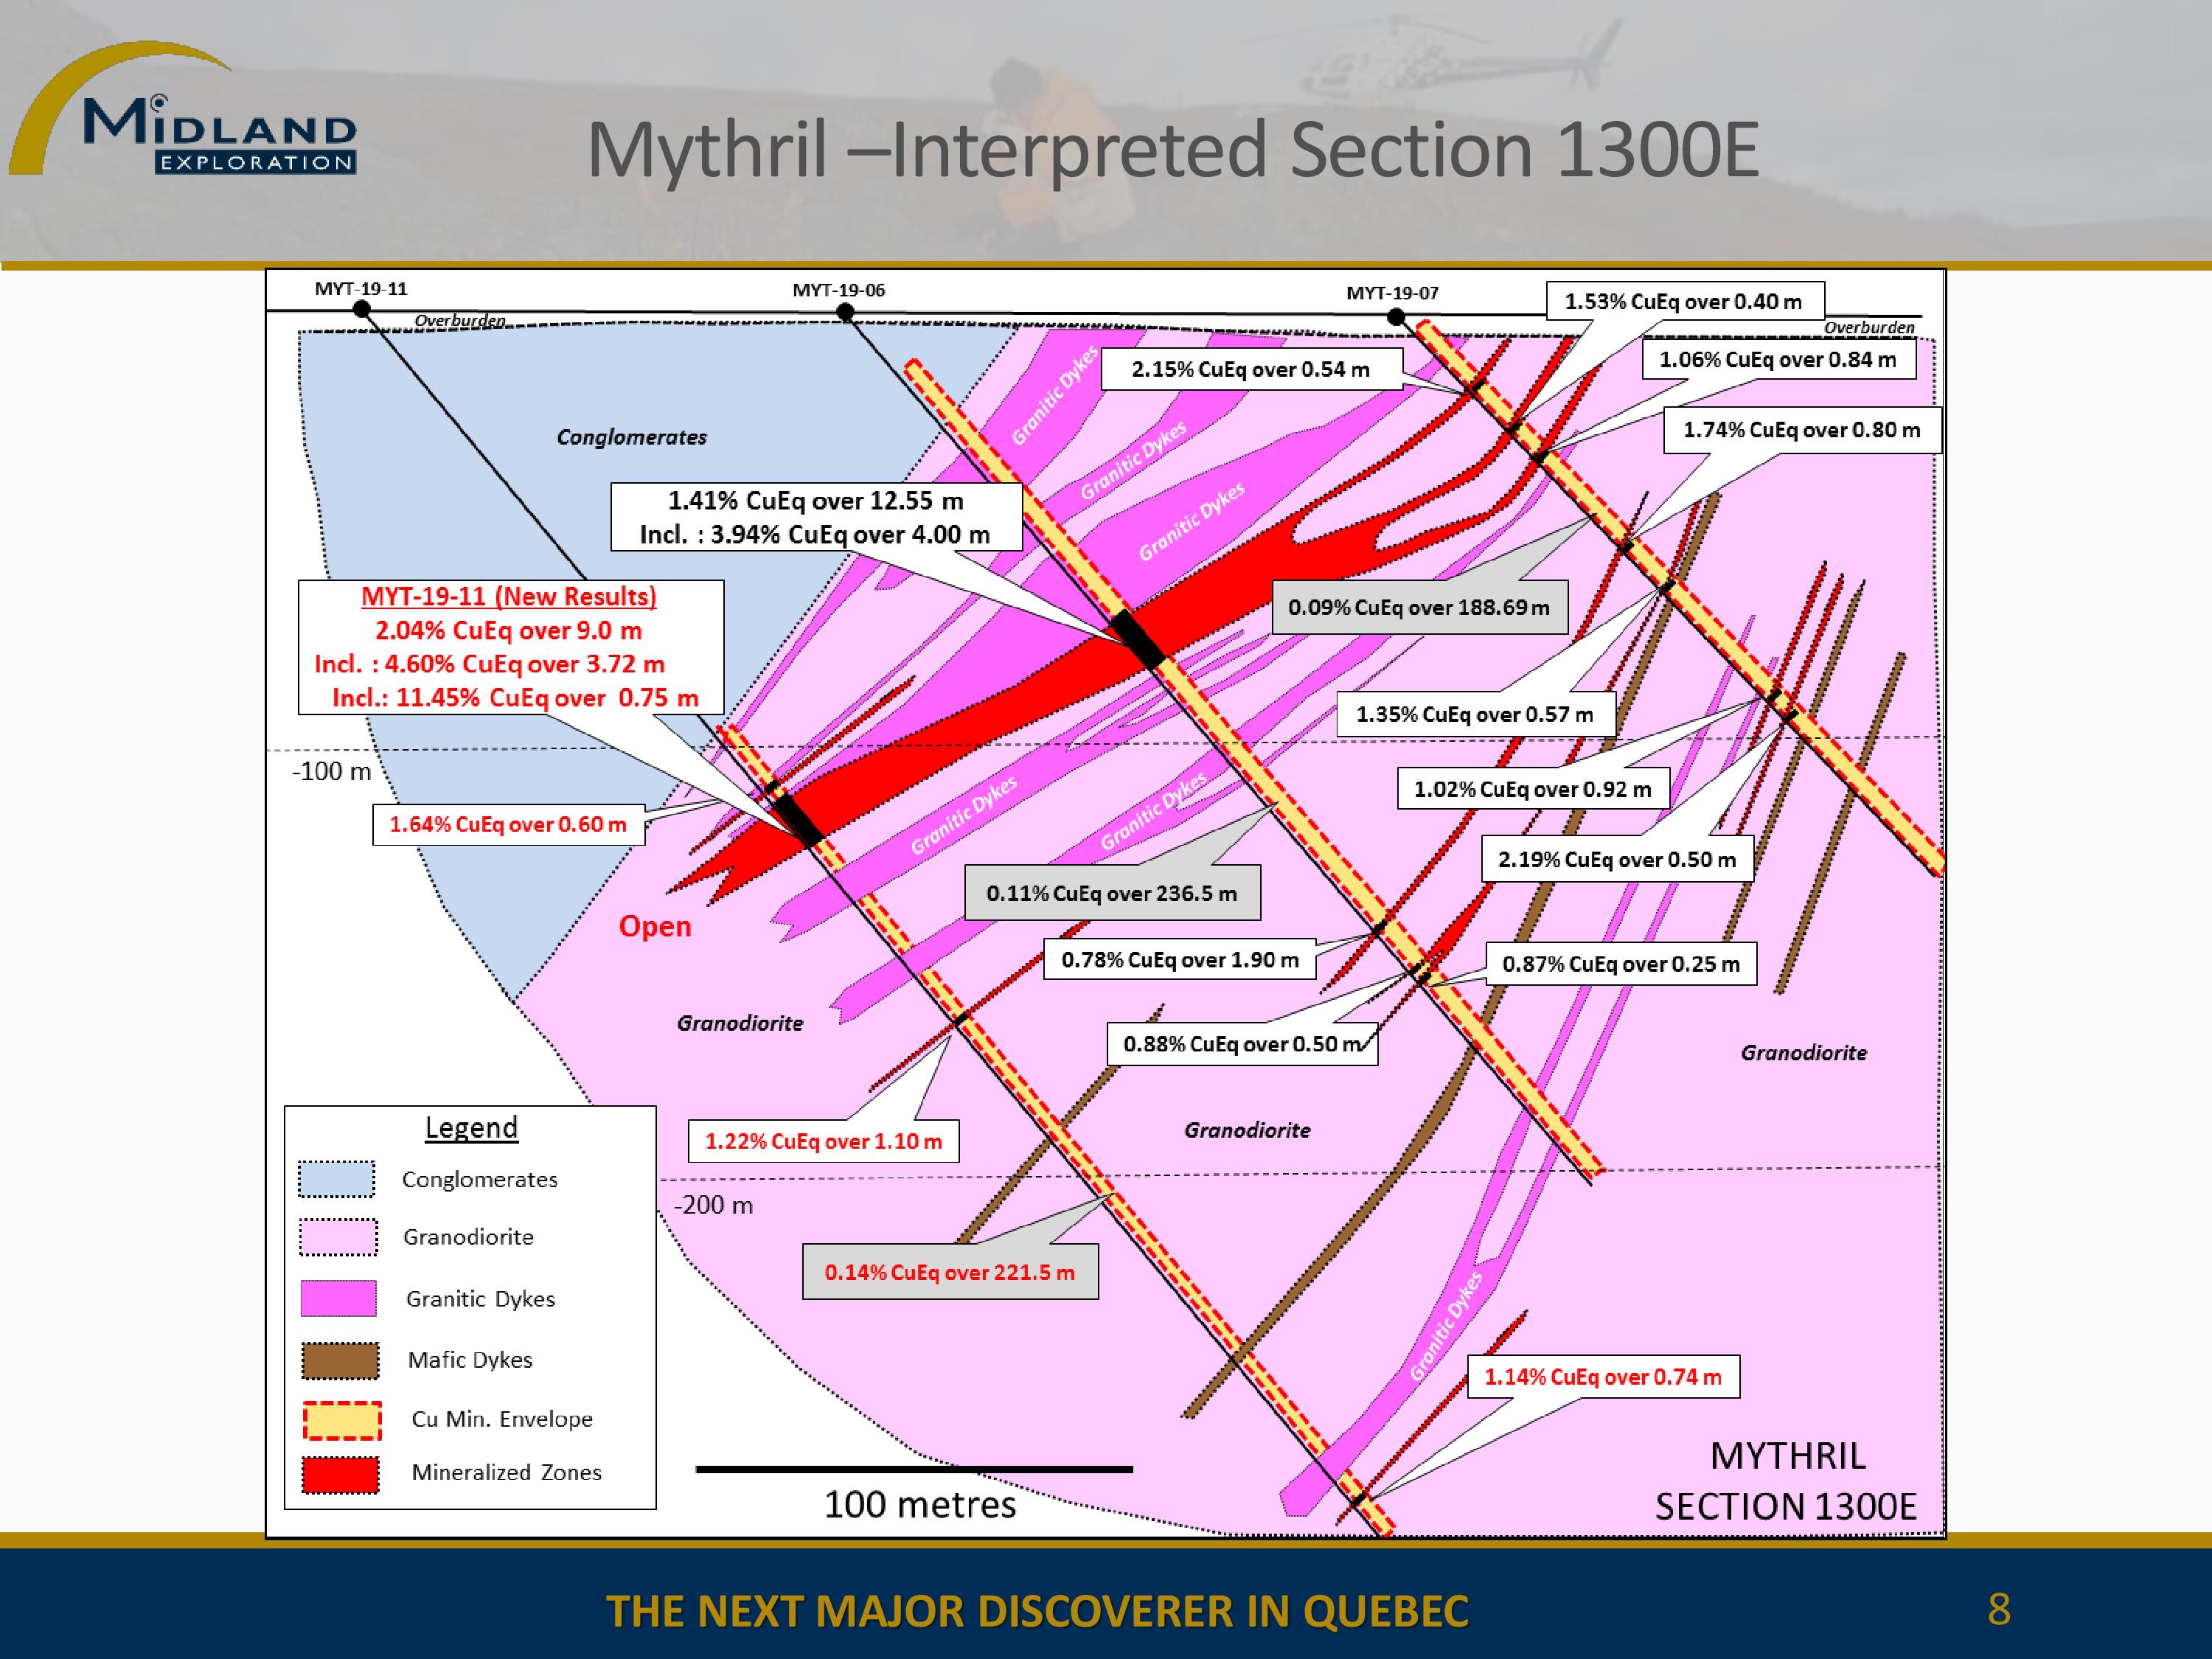 Mythril section 1300E